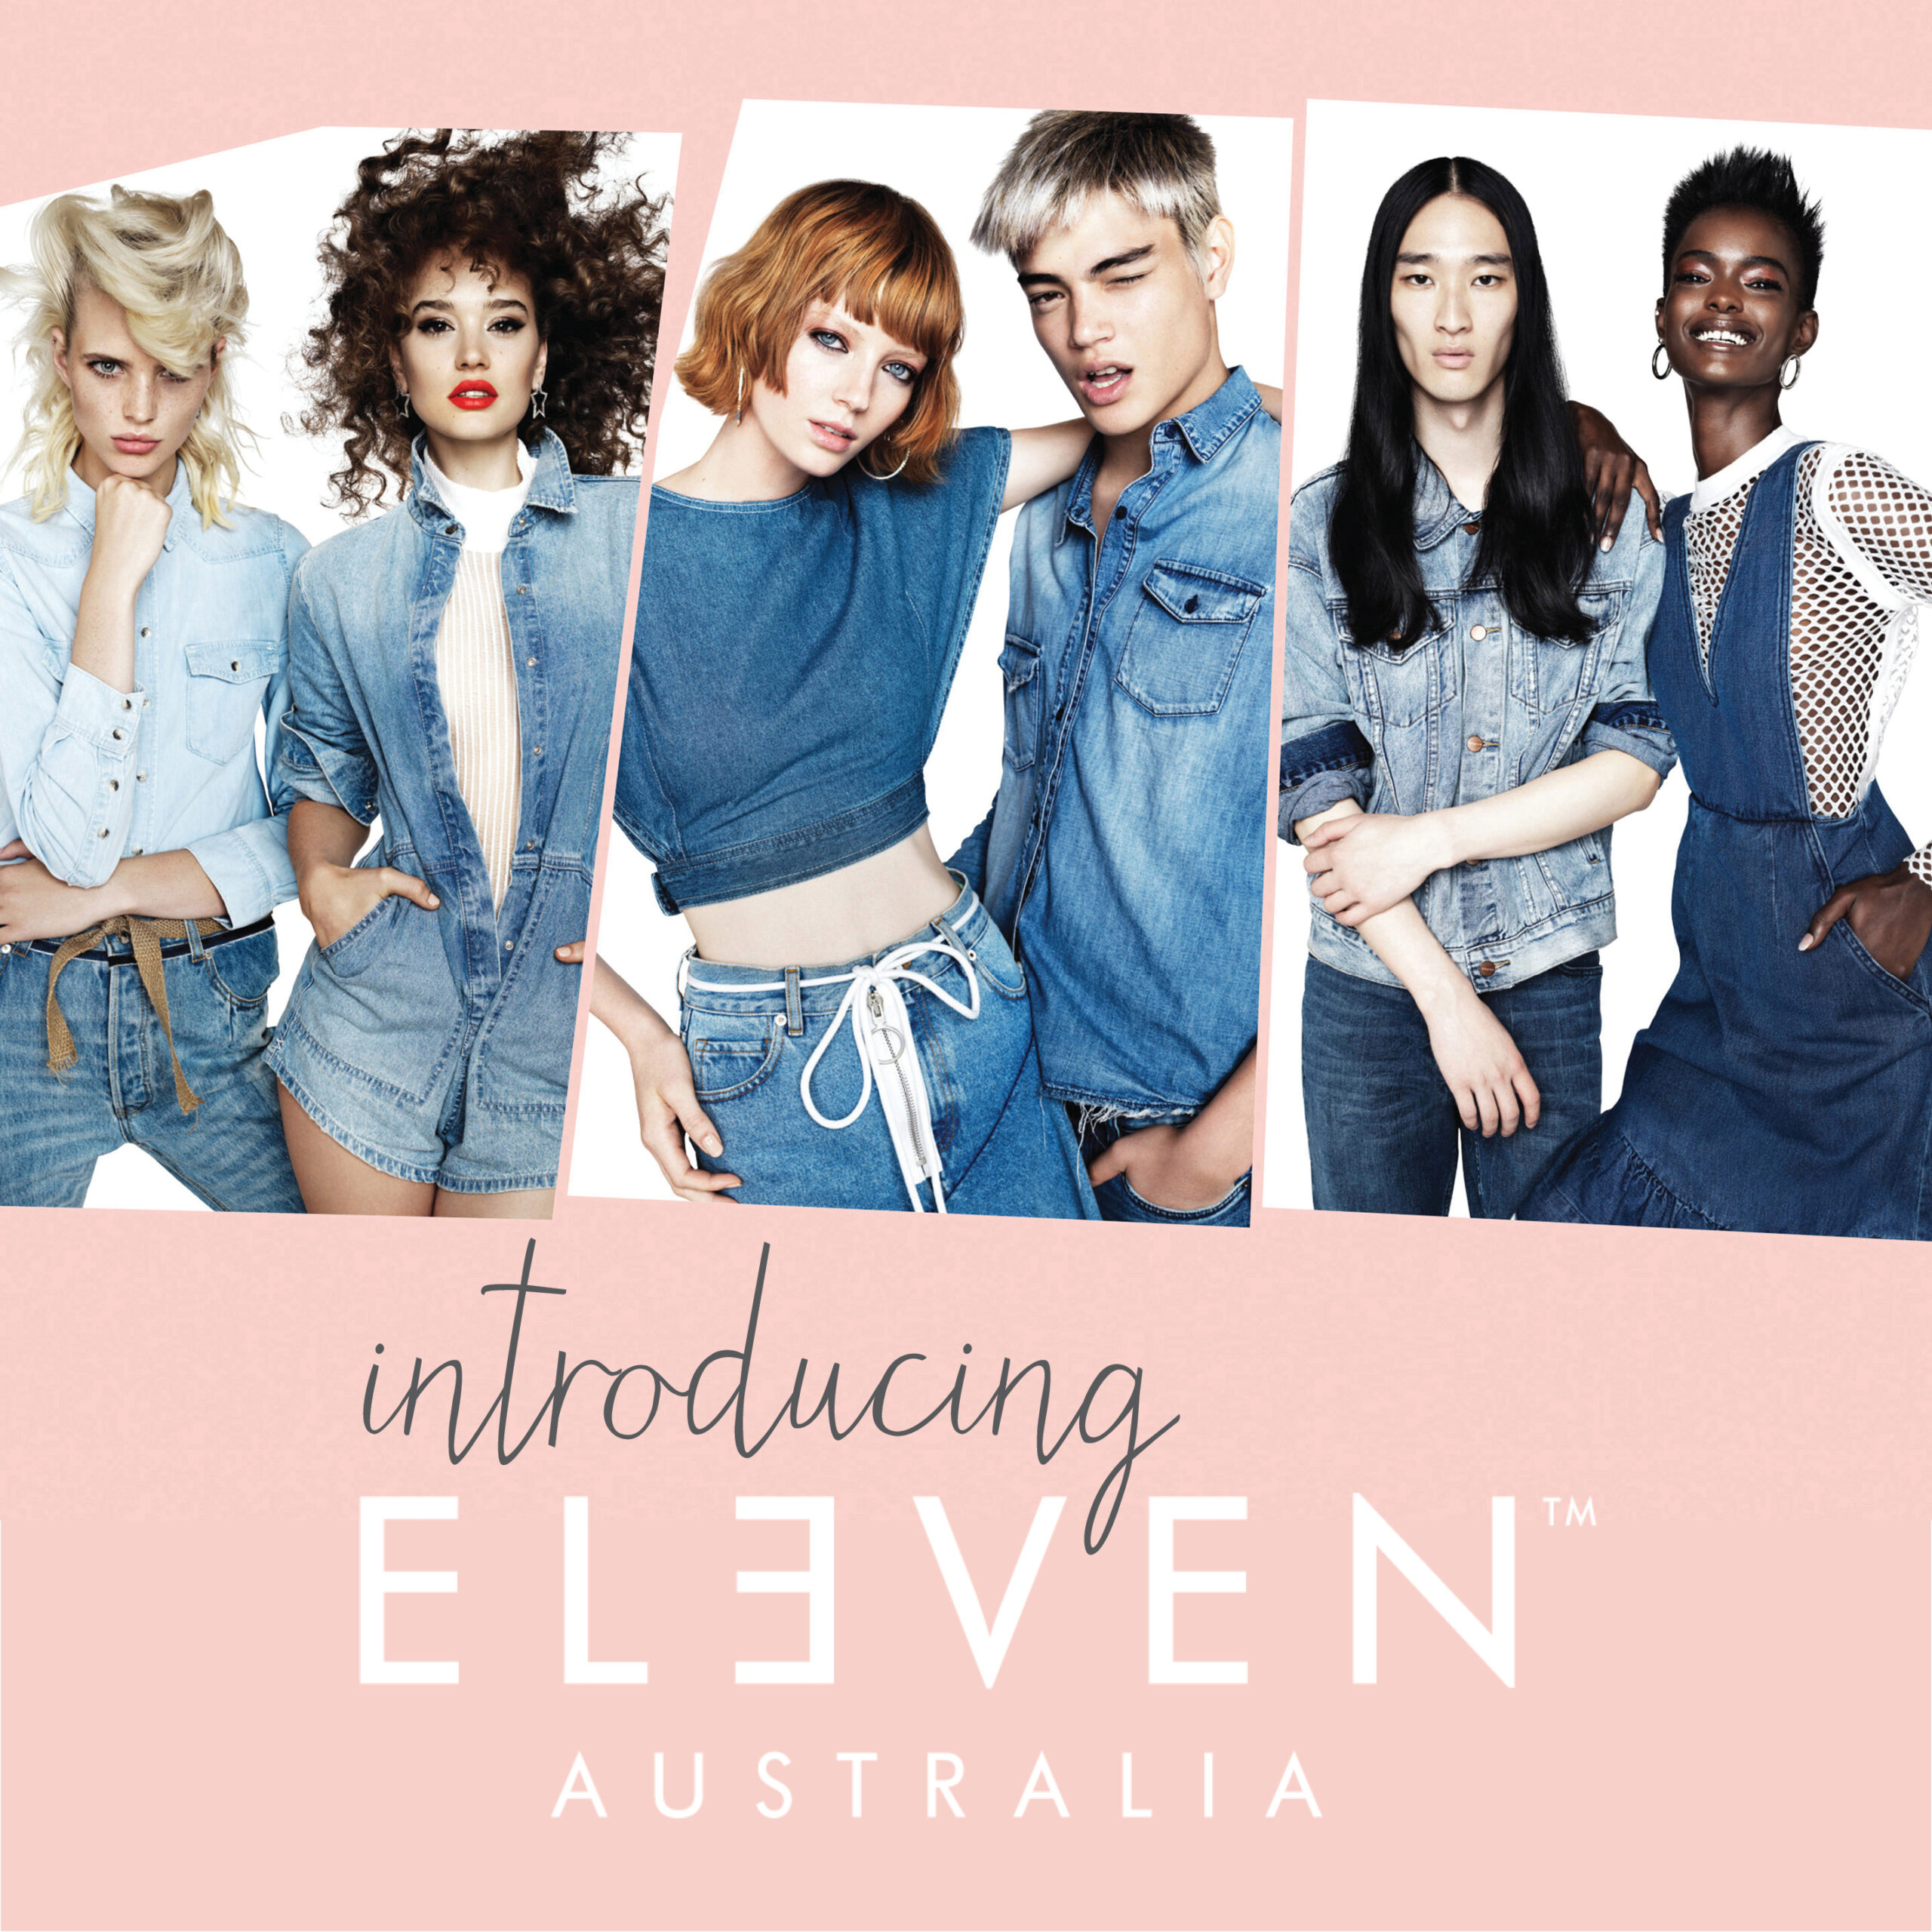 ELEVEN Australia Resources – Salon Service Group